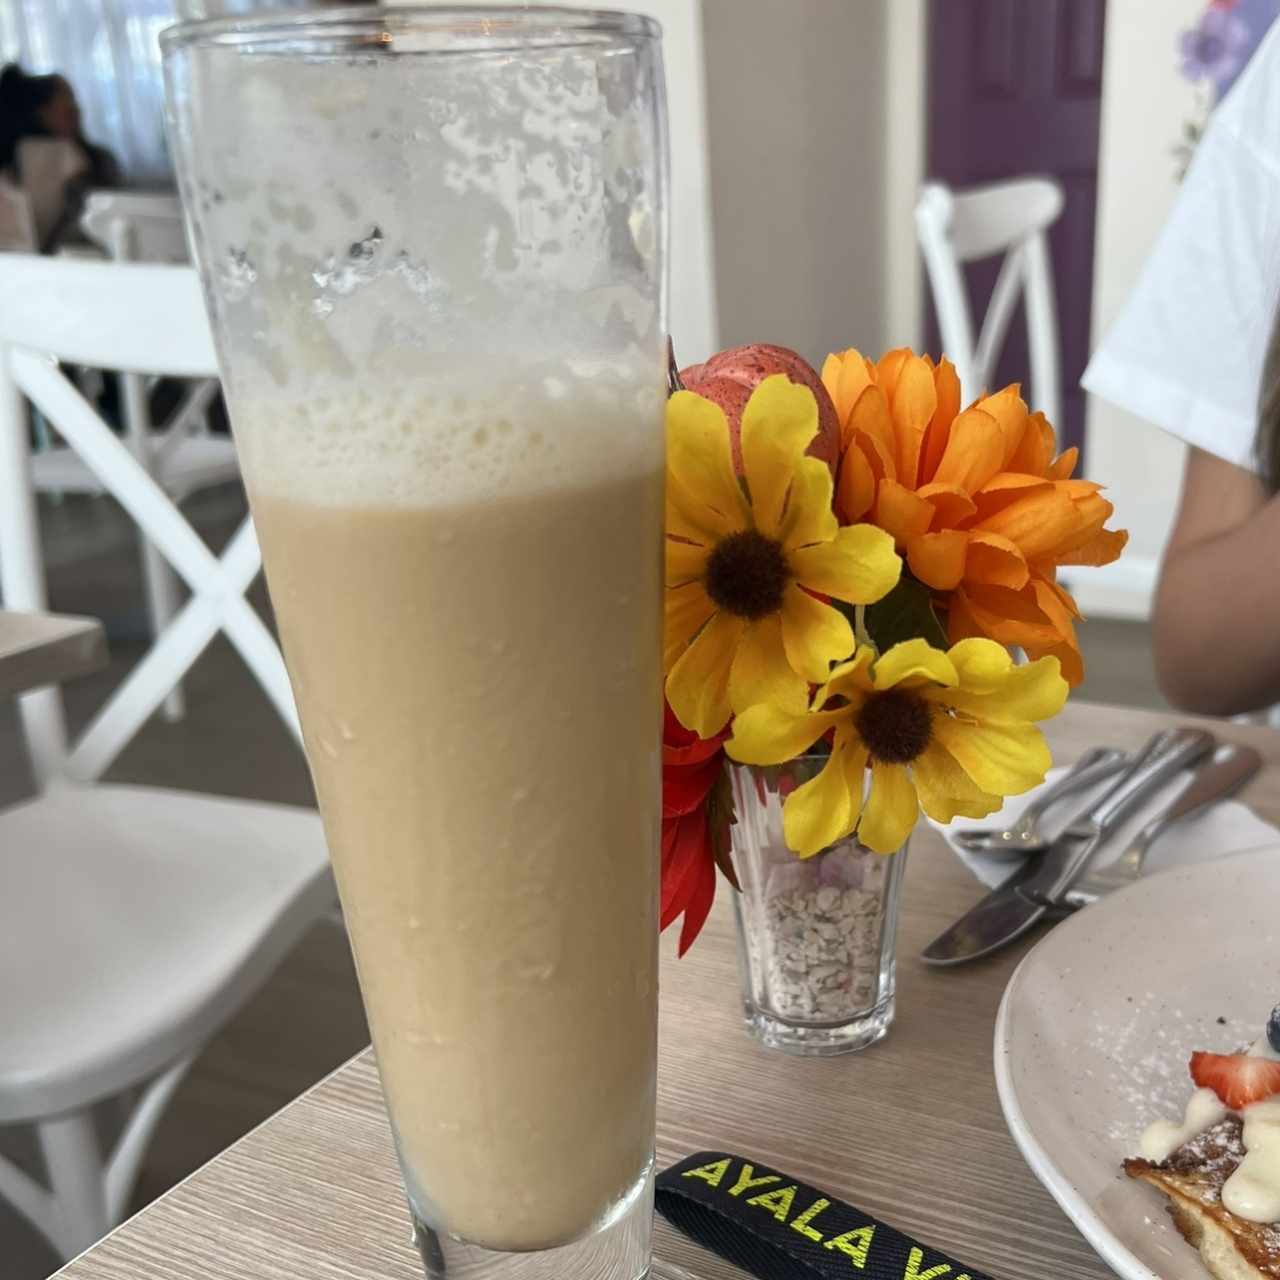 “Caramel” latte